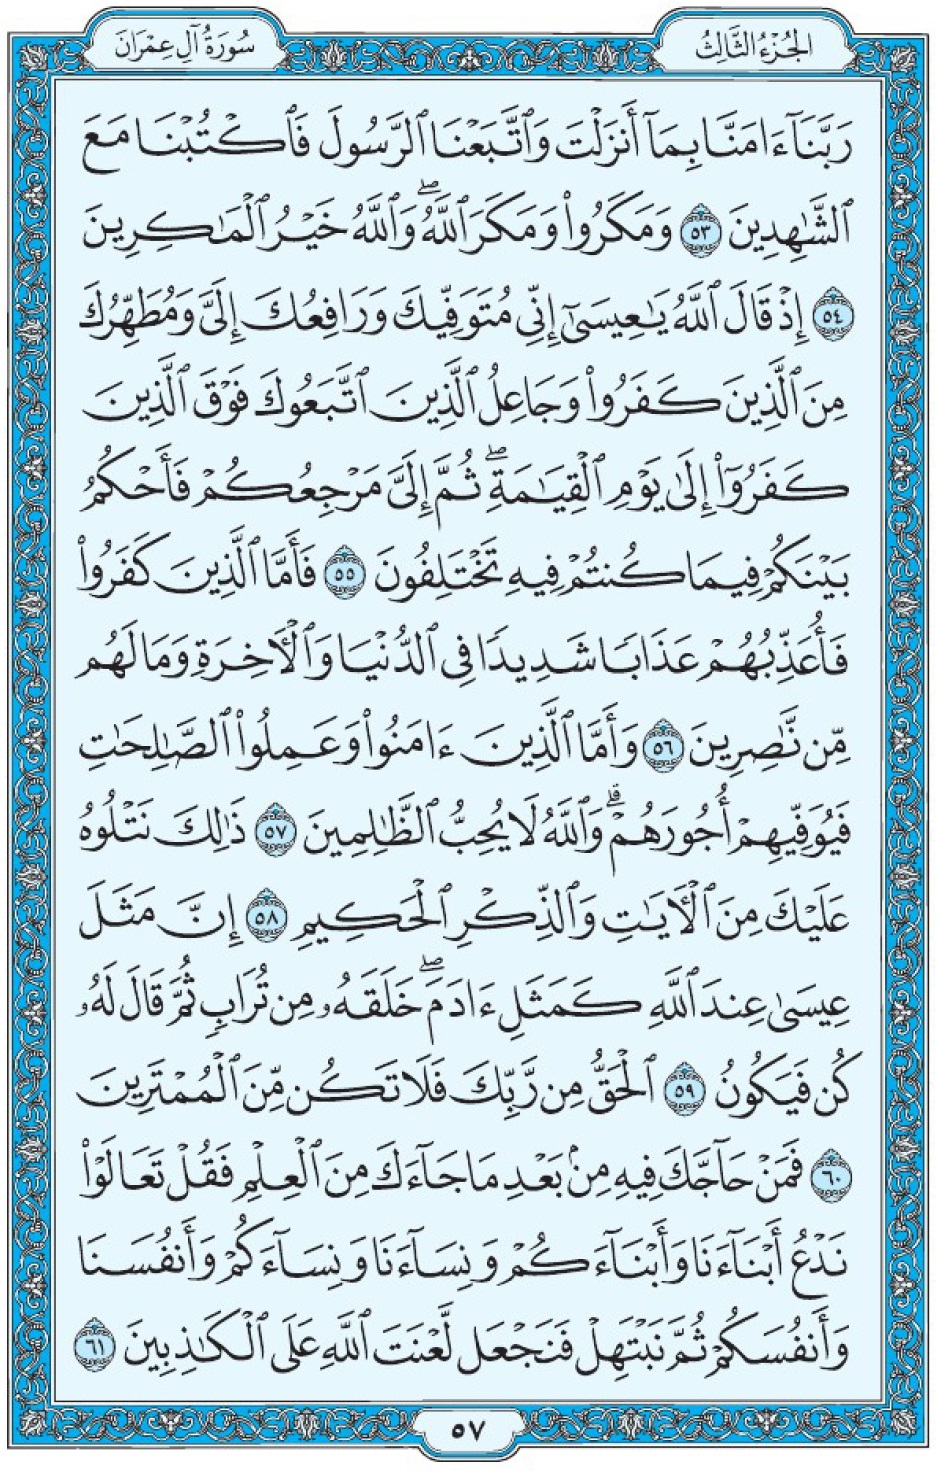 Коран Мединский мусхаф страница 57, Али Имран, аят 53-61